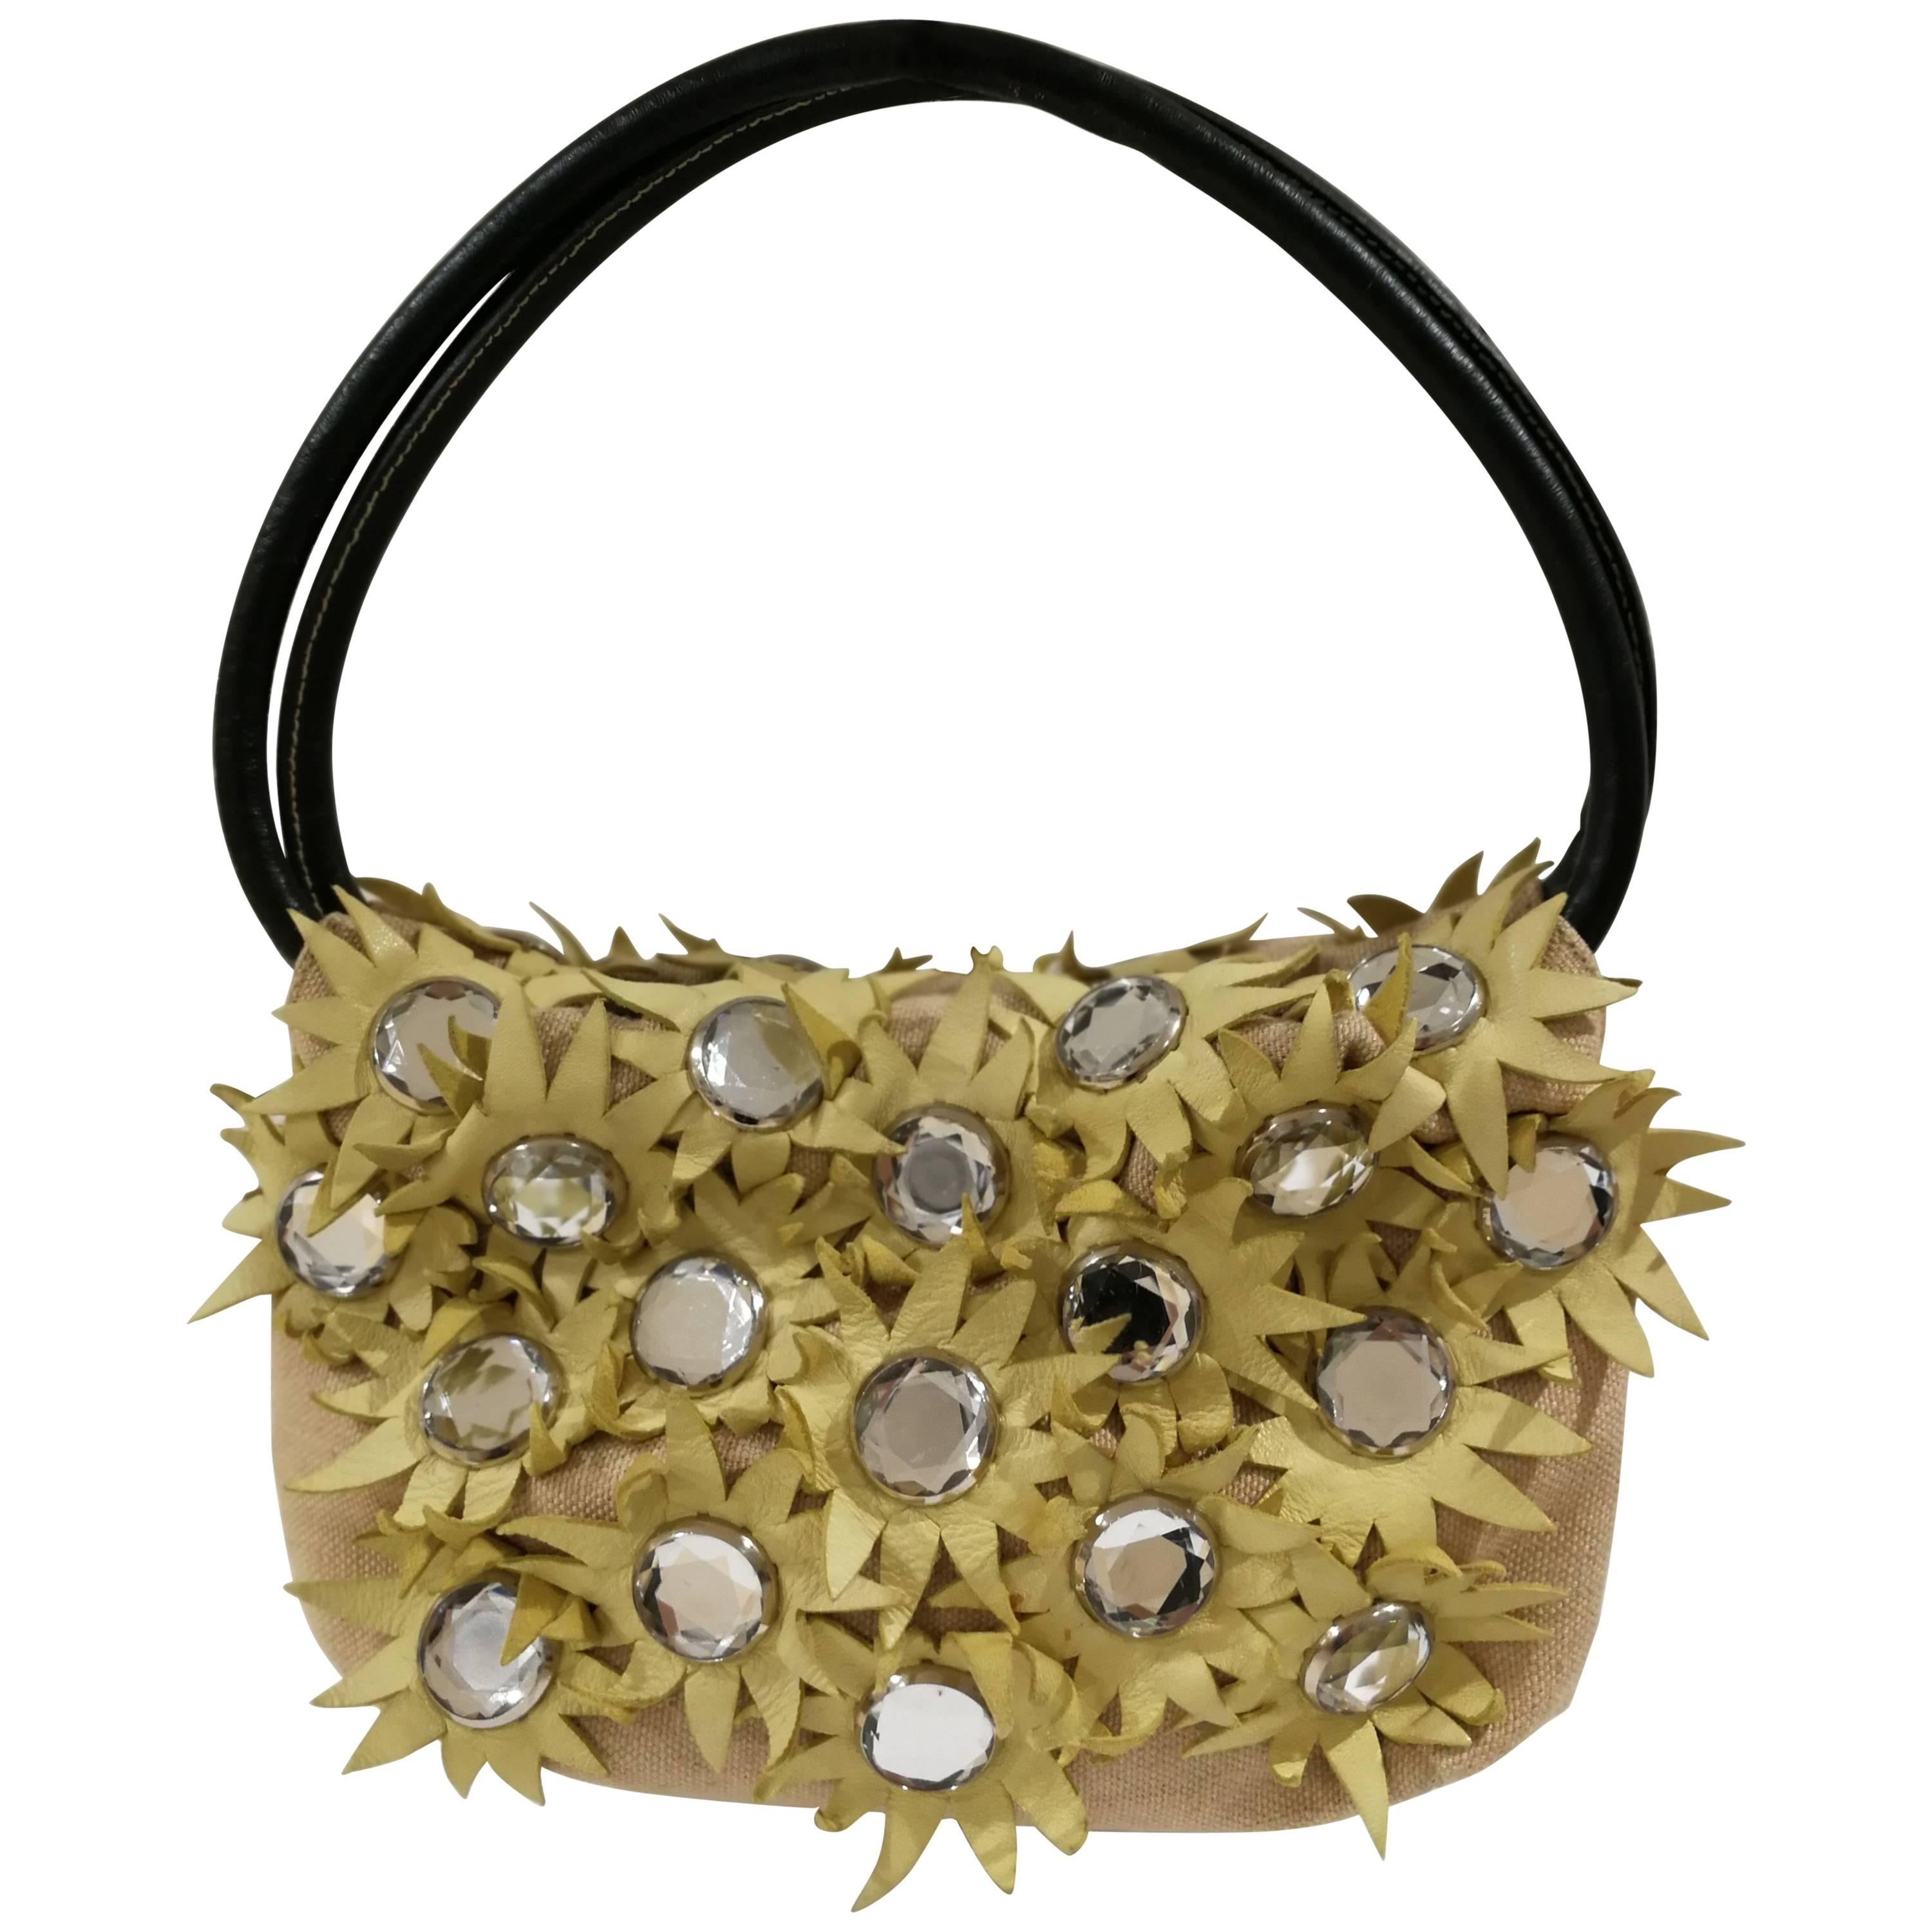 Sonia Rykiel daisies limited edition shoulder bag